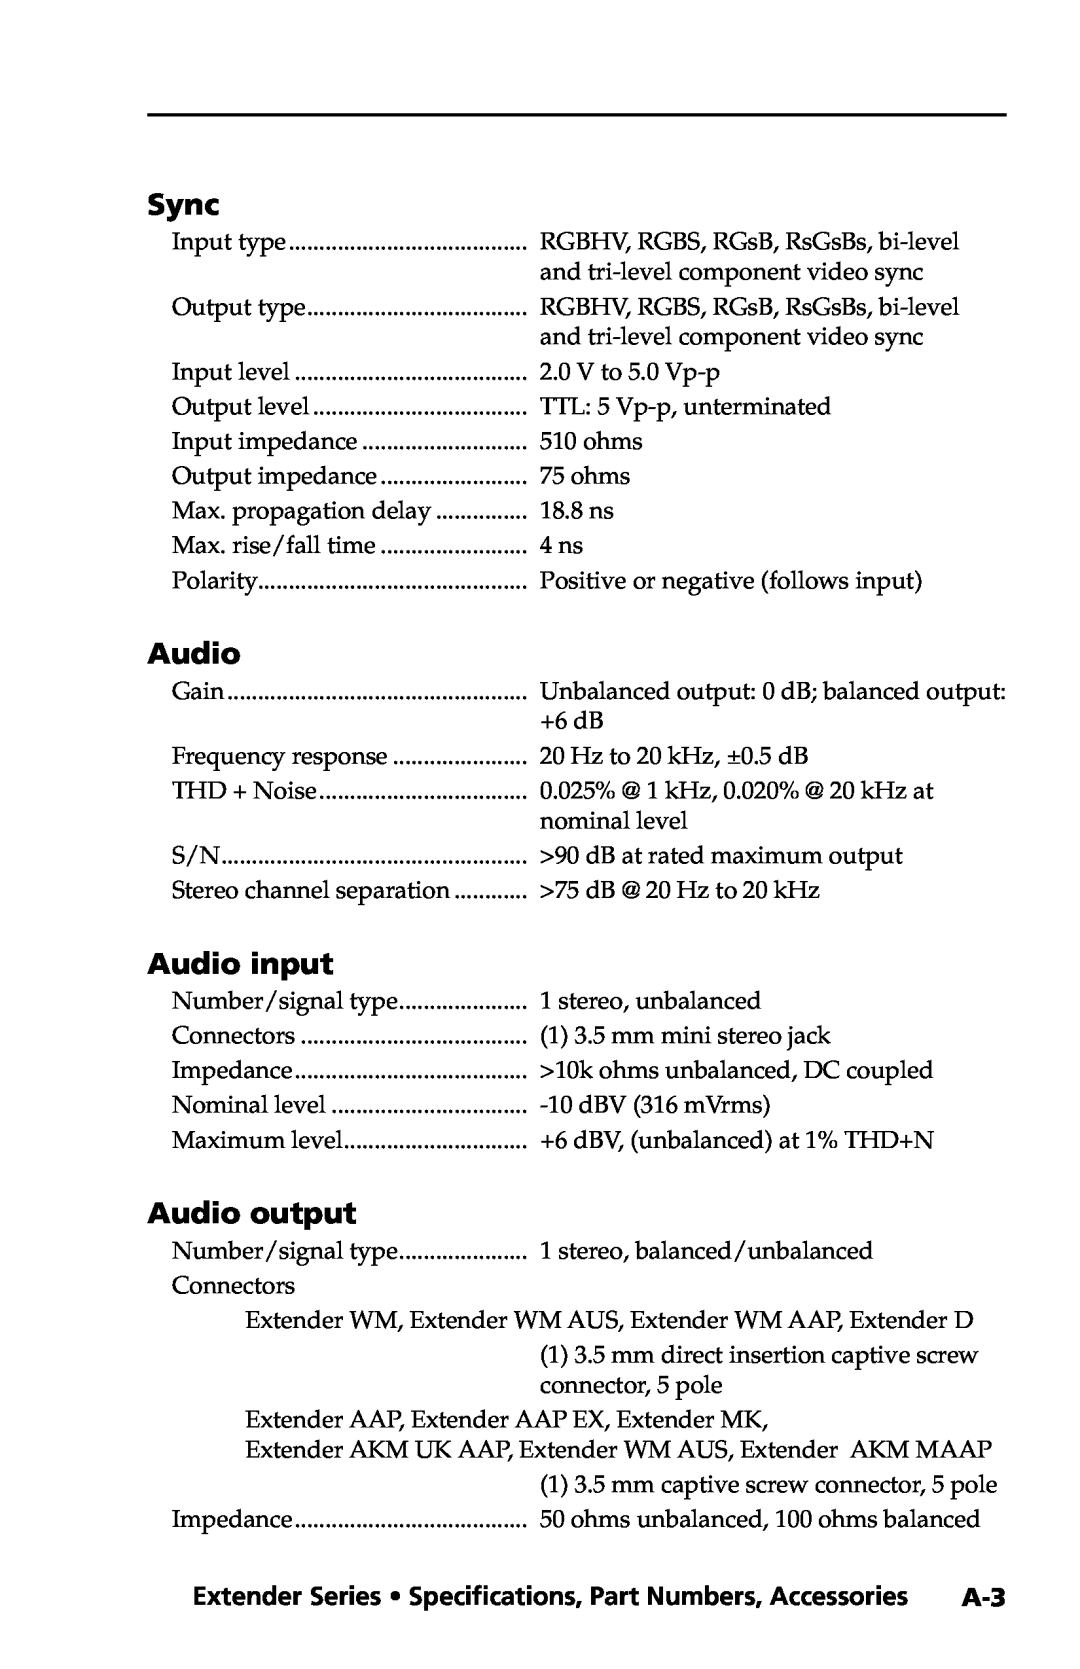 Extron electronic Extender Series manual Sync, Audio input, Audio output, Preliminary 